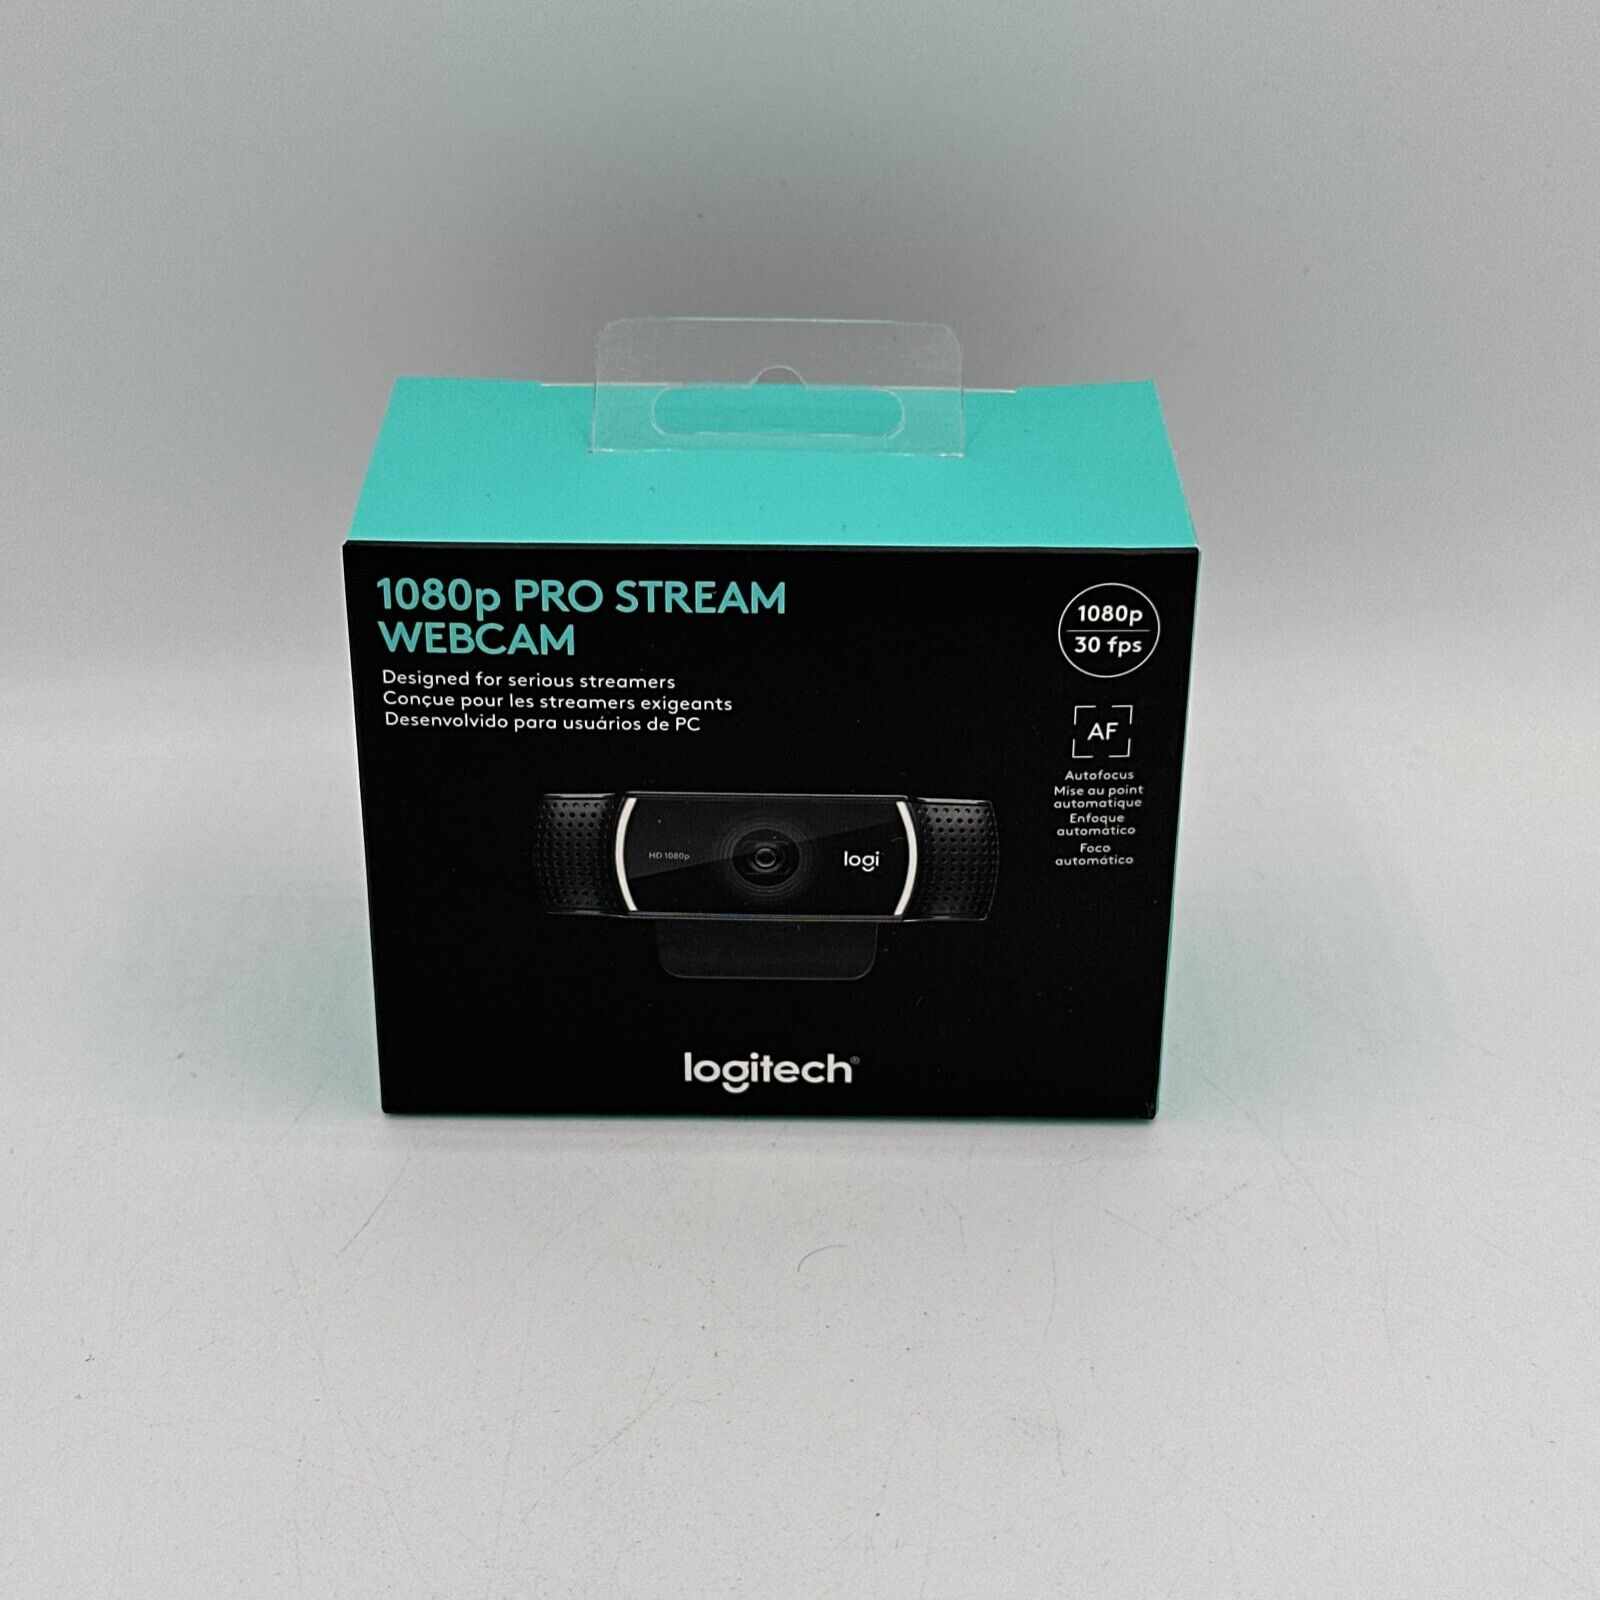 Logitech 1080p Pro Stream Webcam HD Video Streaming, Recording at 1080p 30FPS